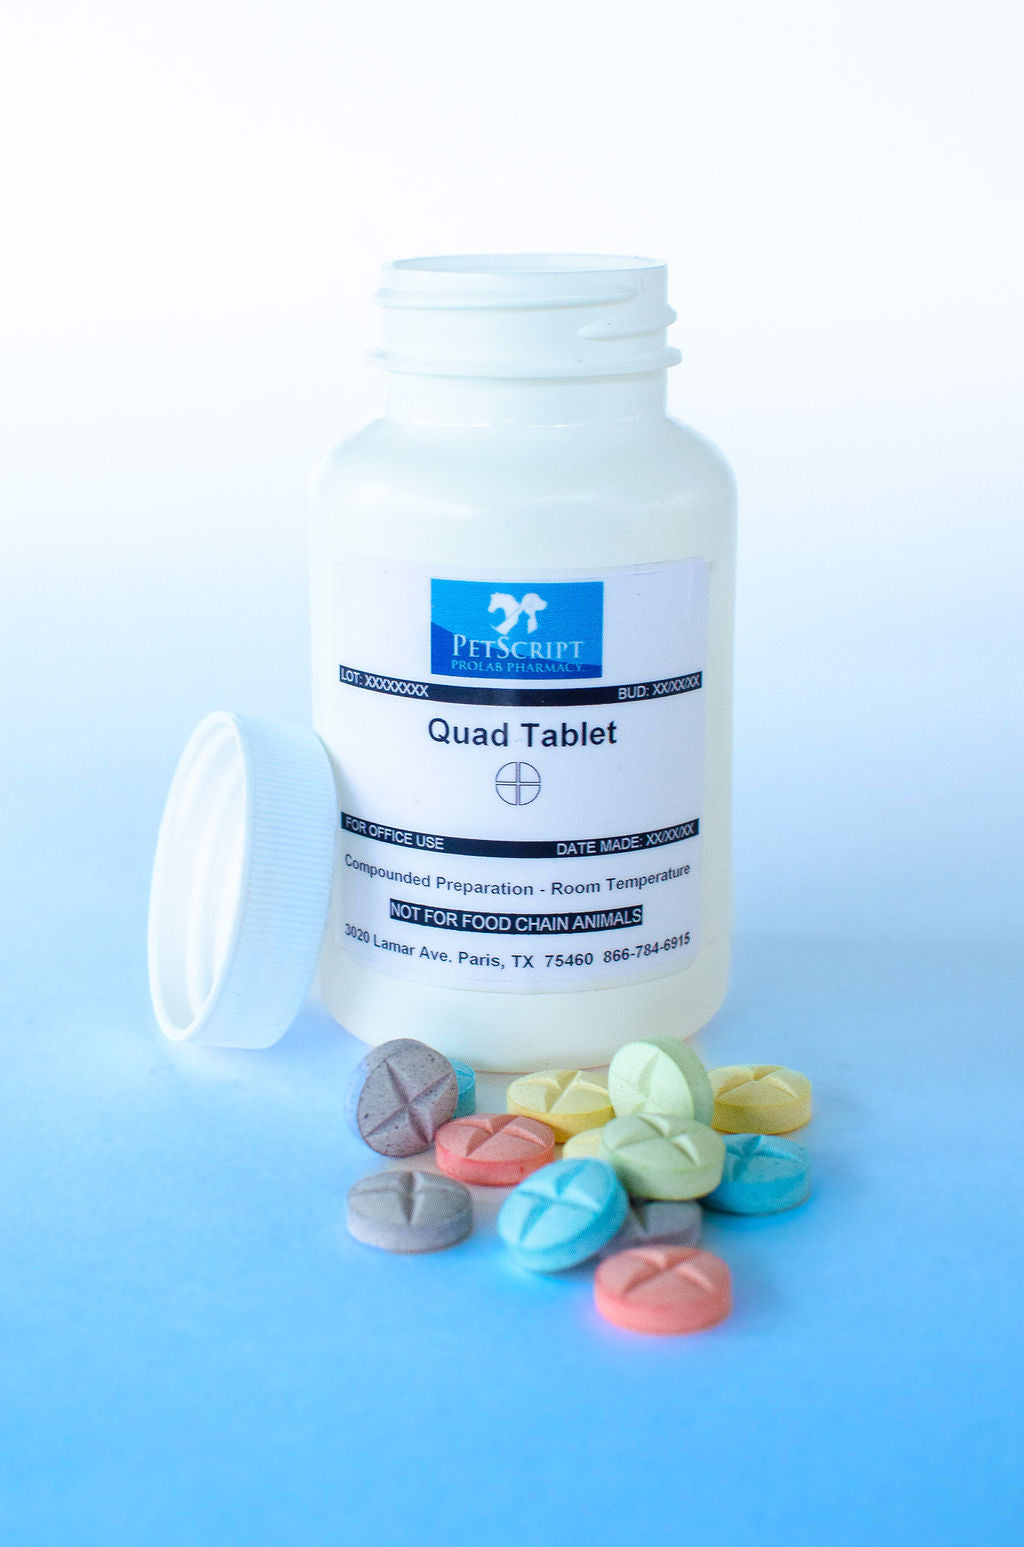 Ketoconazole 100mg Quadrisect Tablet (Chicken Flavor) - PetScript Pharmacy